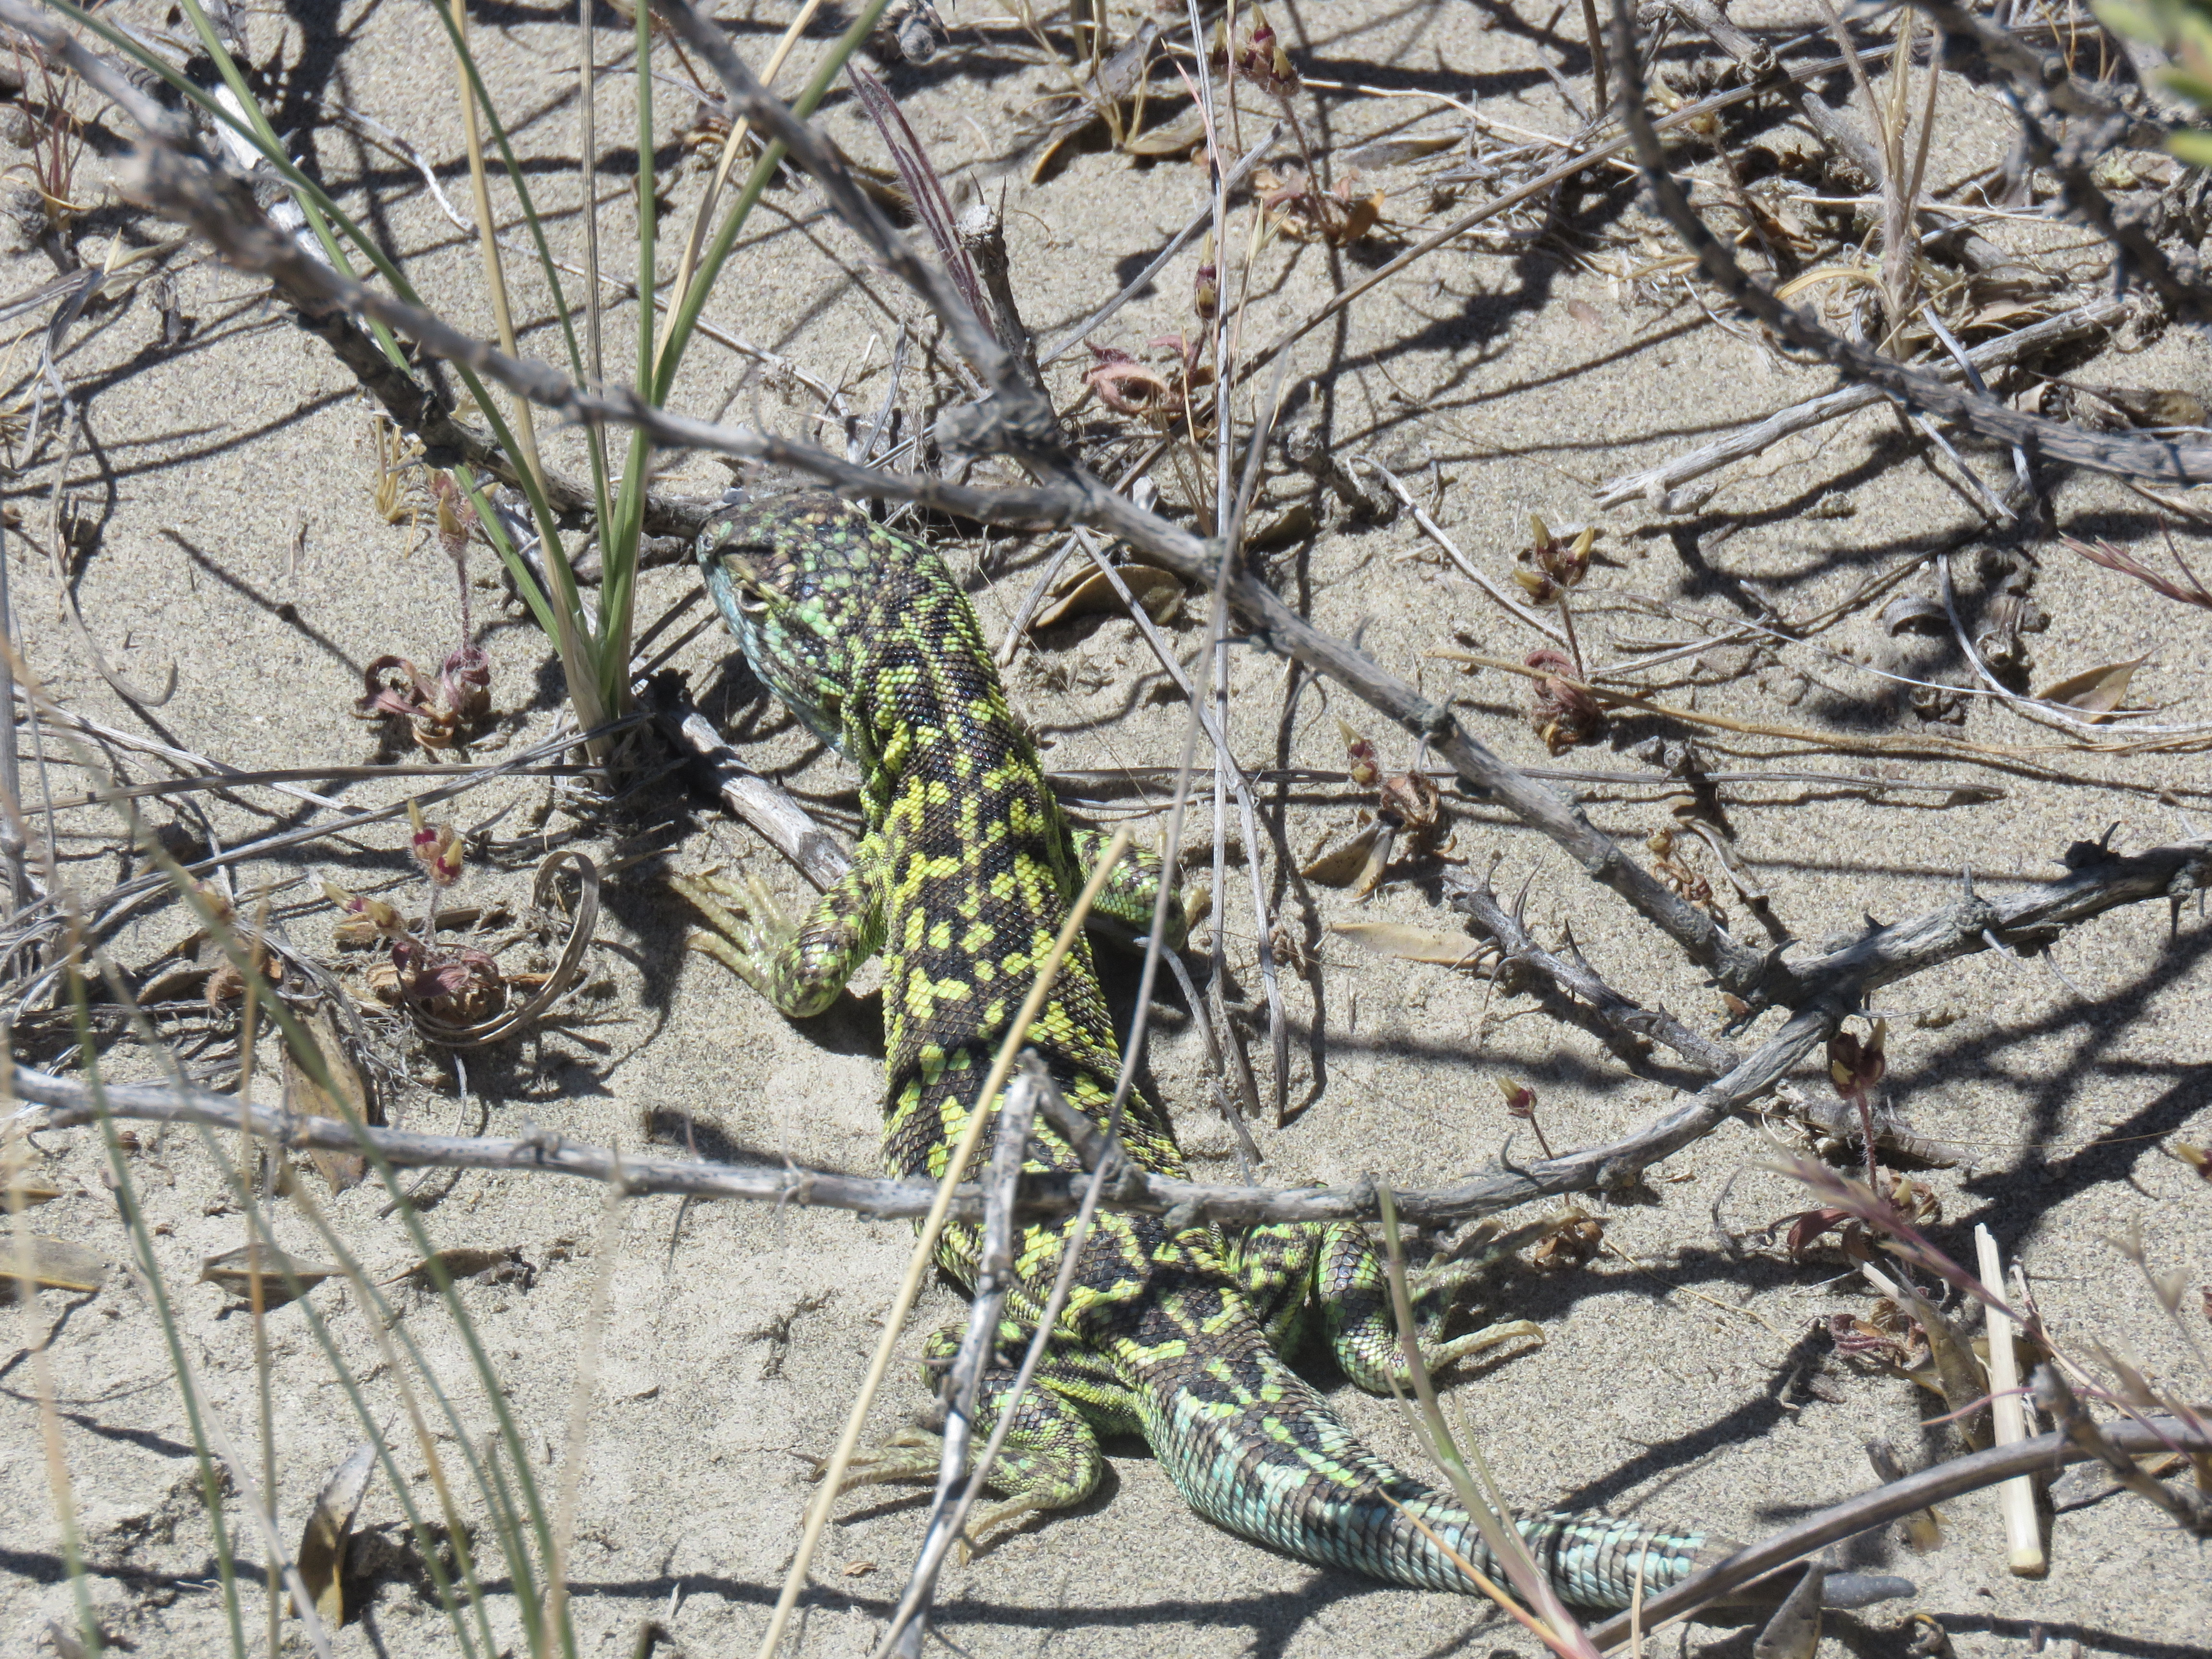 A green and black speckled lizard called liolanus melanops.